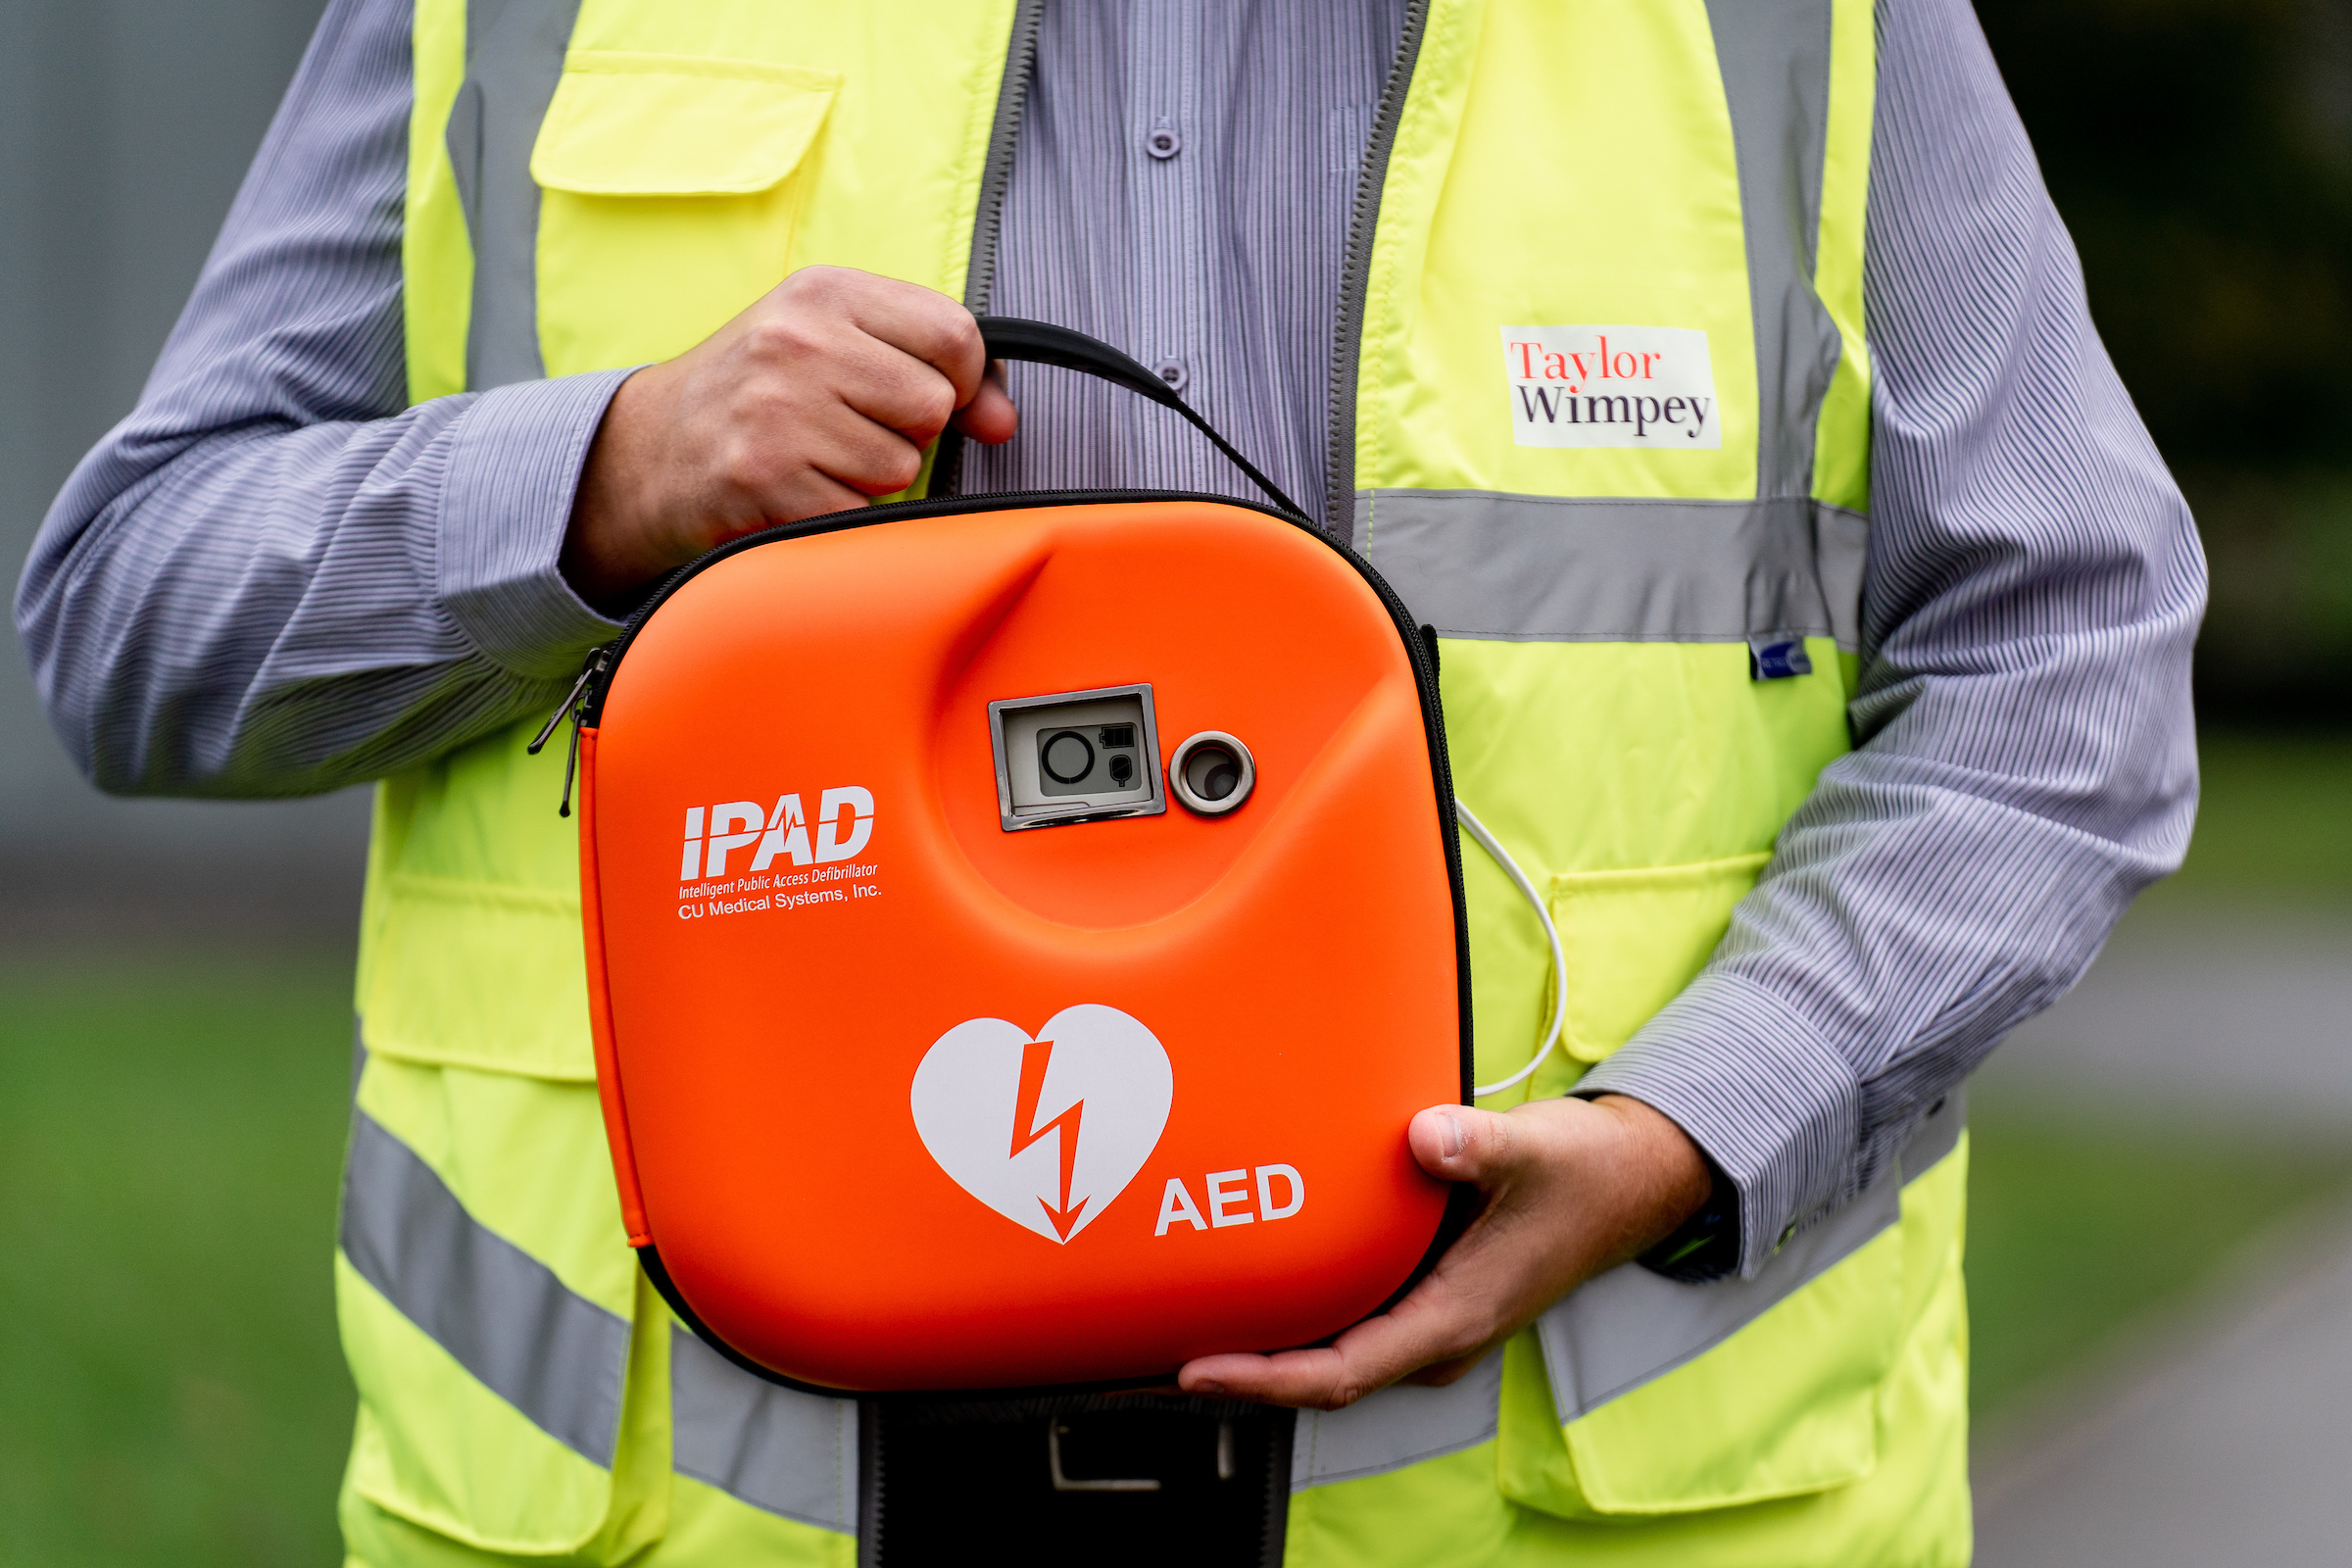 Taylor Wimpey donates lifesaving defibrillator in Gorebridge